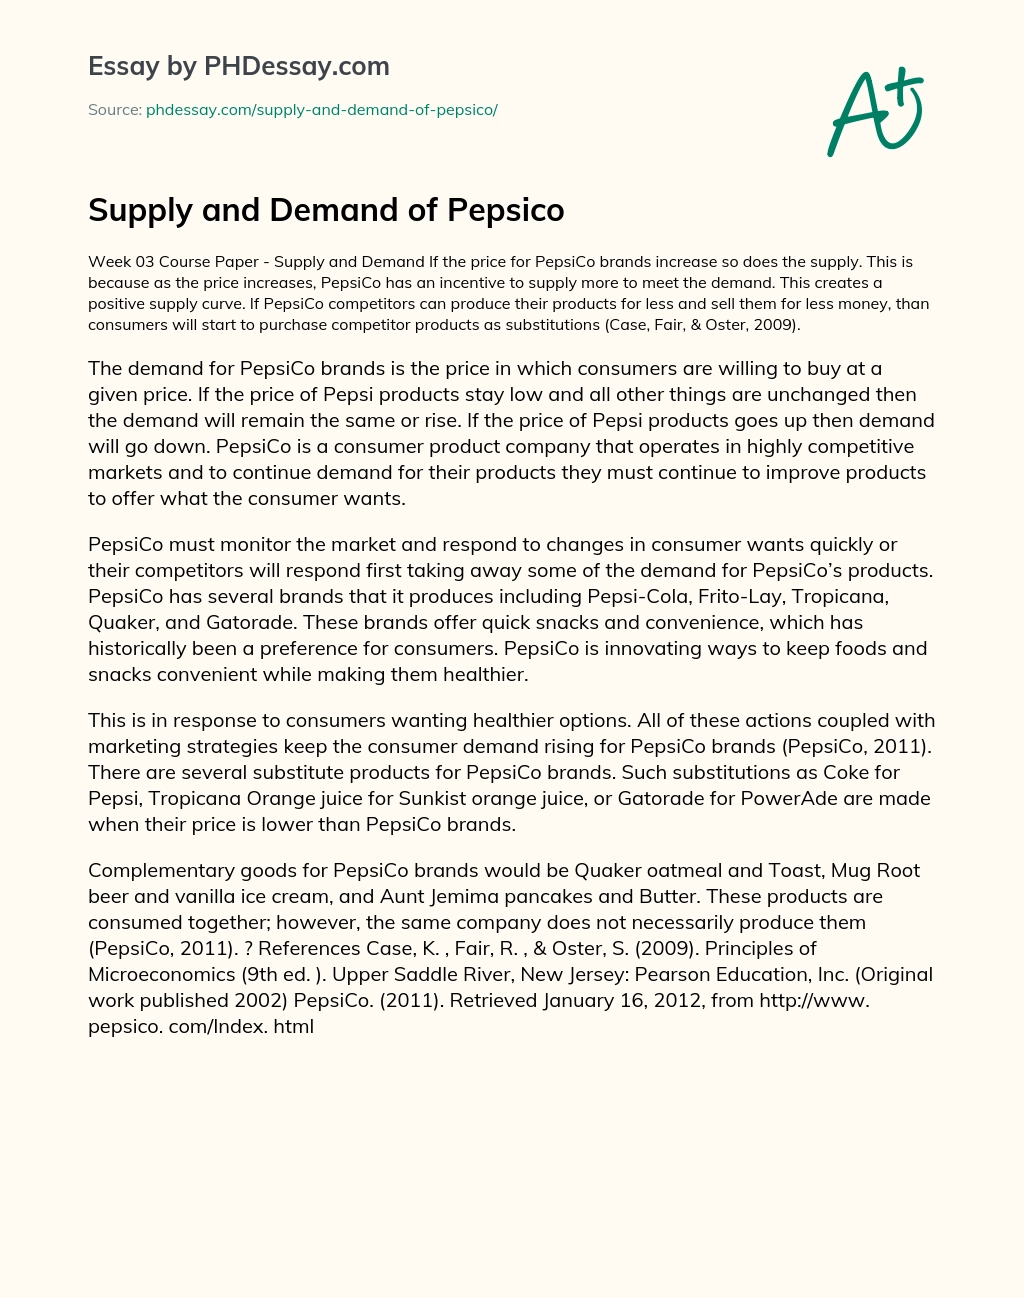 Supply and Demand of Pepsico essay